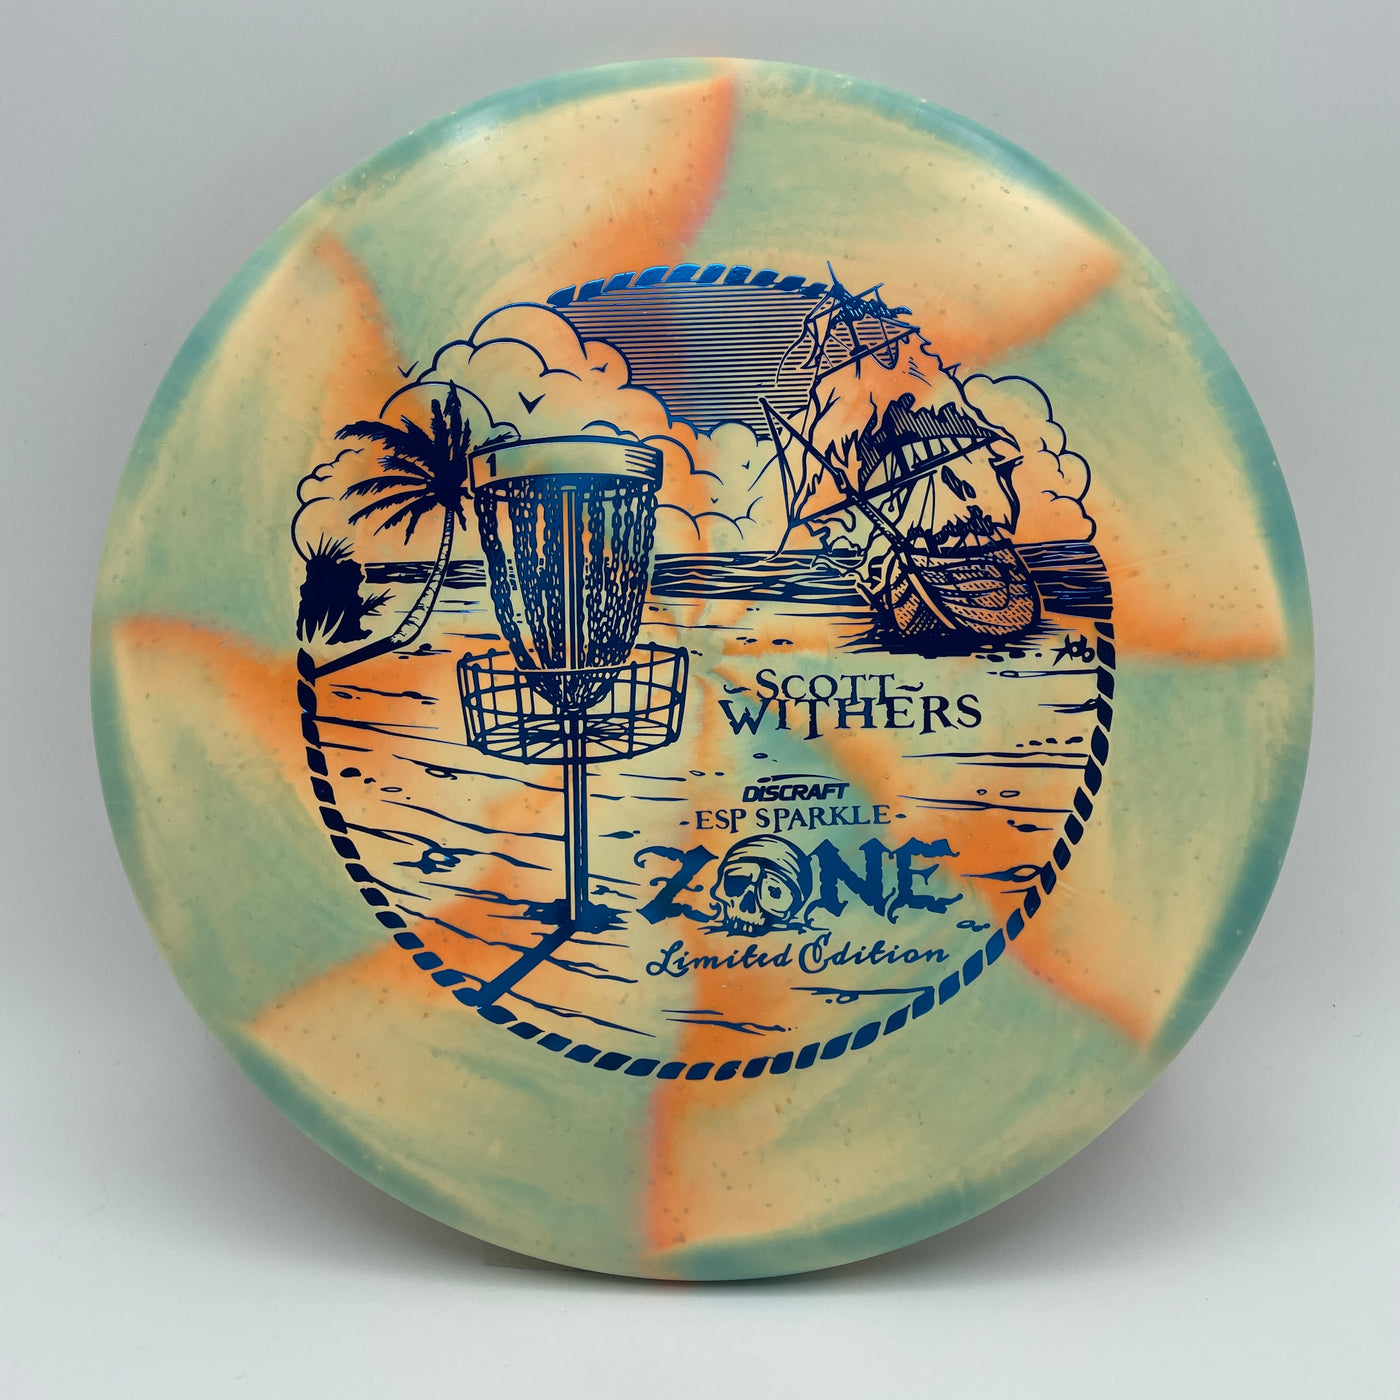 Scott Withers ESP Sparkle Zone - Blue Stamp